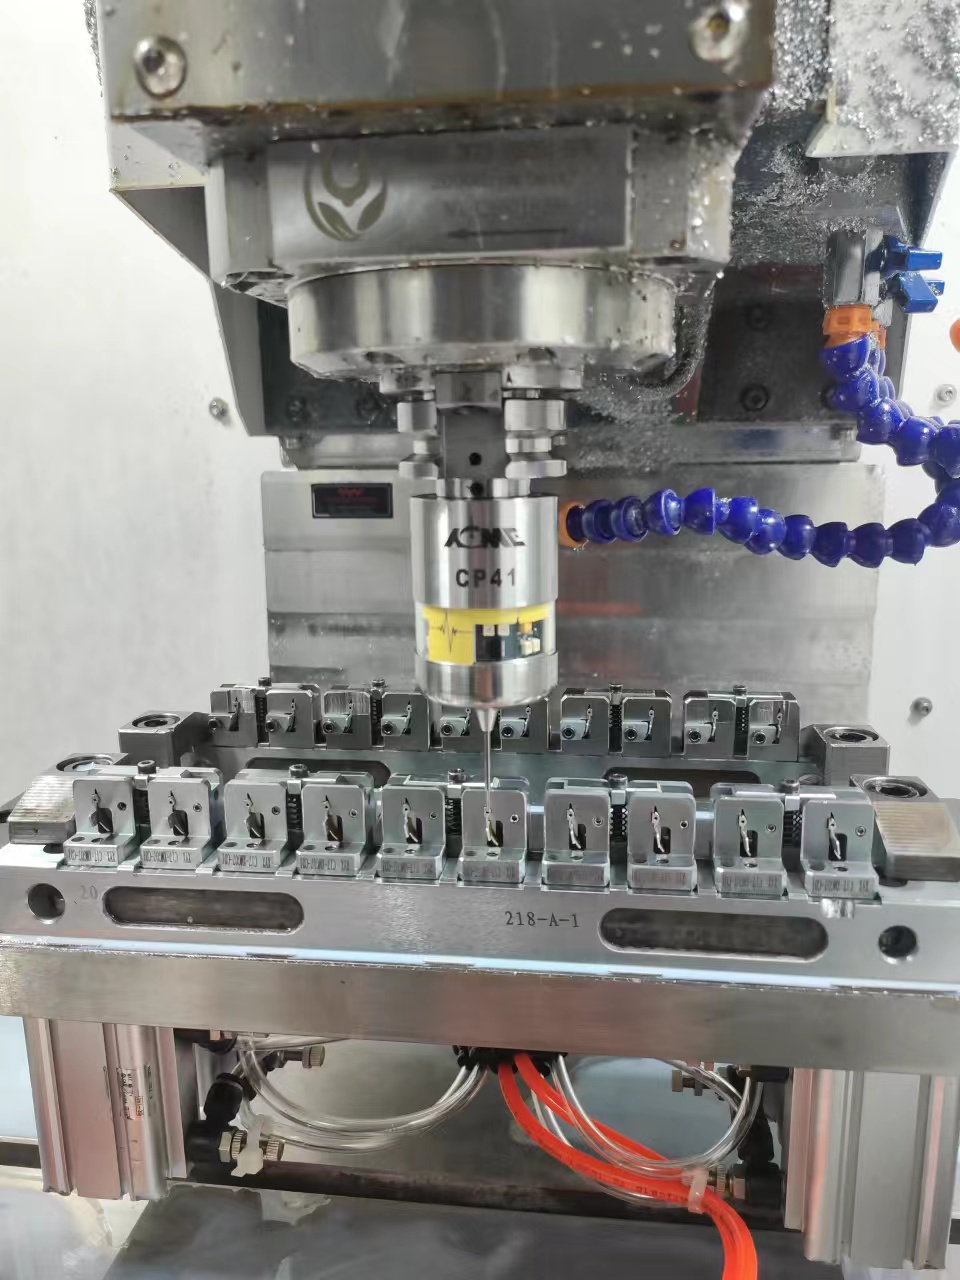 CNC center ultra-high precision machine tool measuring CP41 (5)